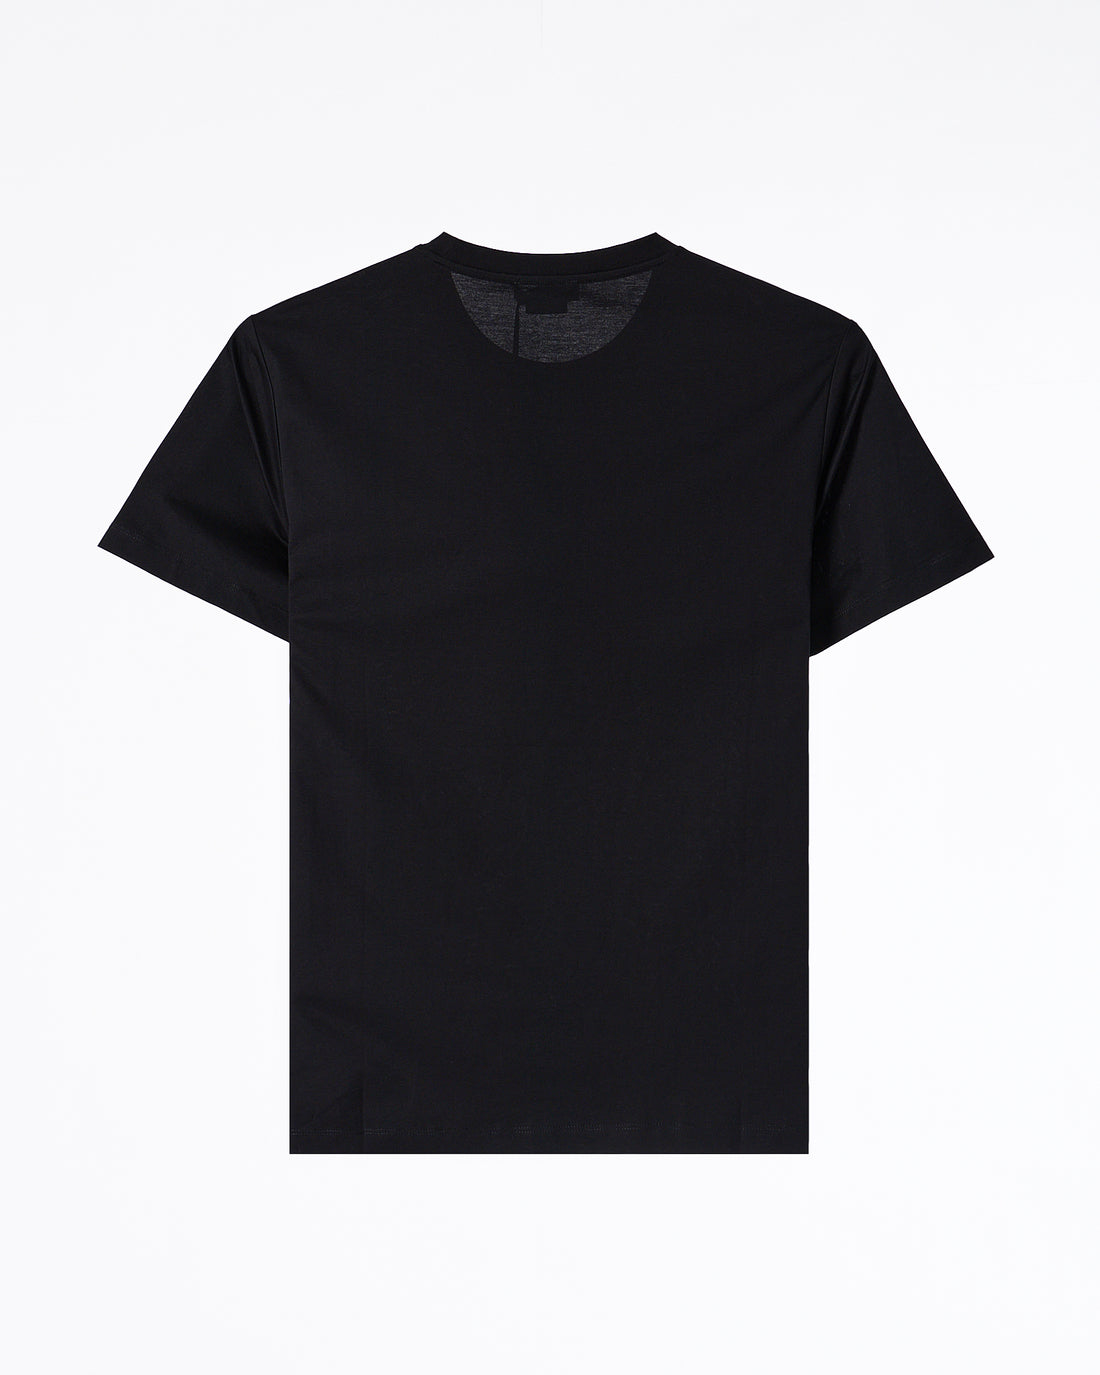 Rhinestone Medusa Printed Men T-Shirt 64.90